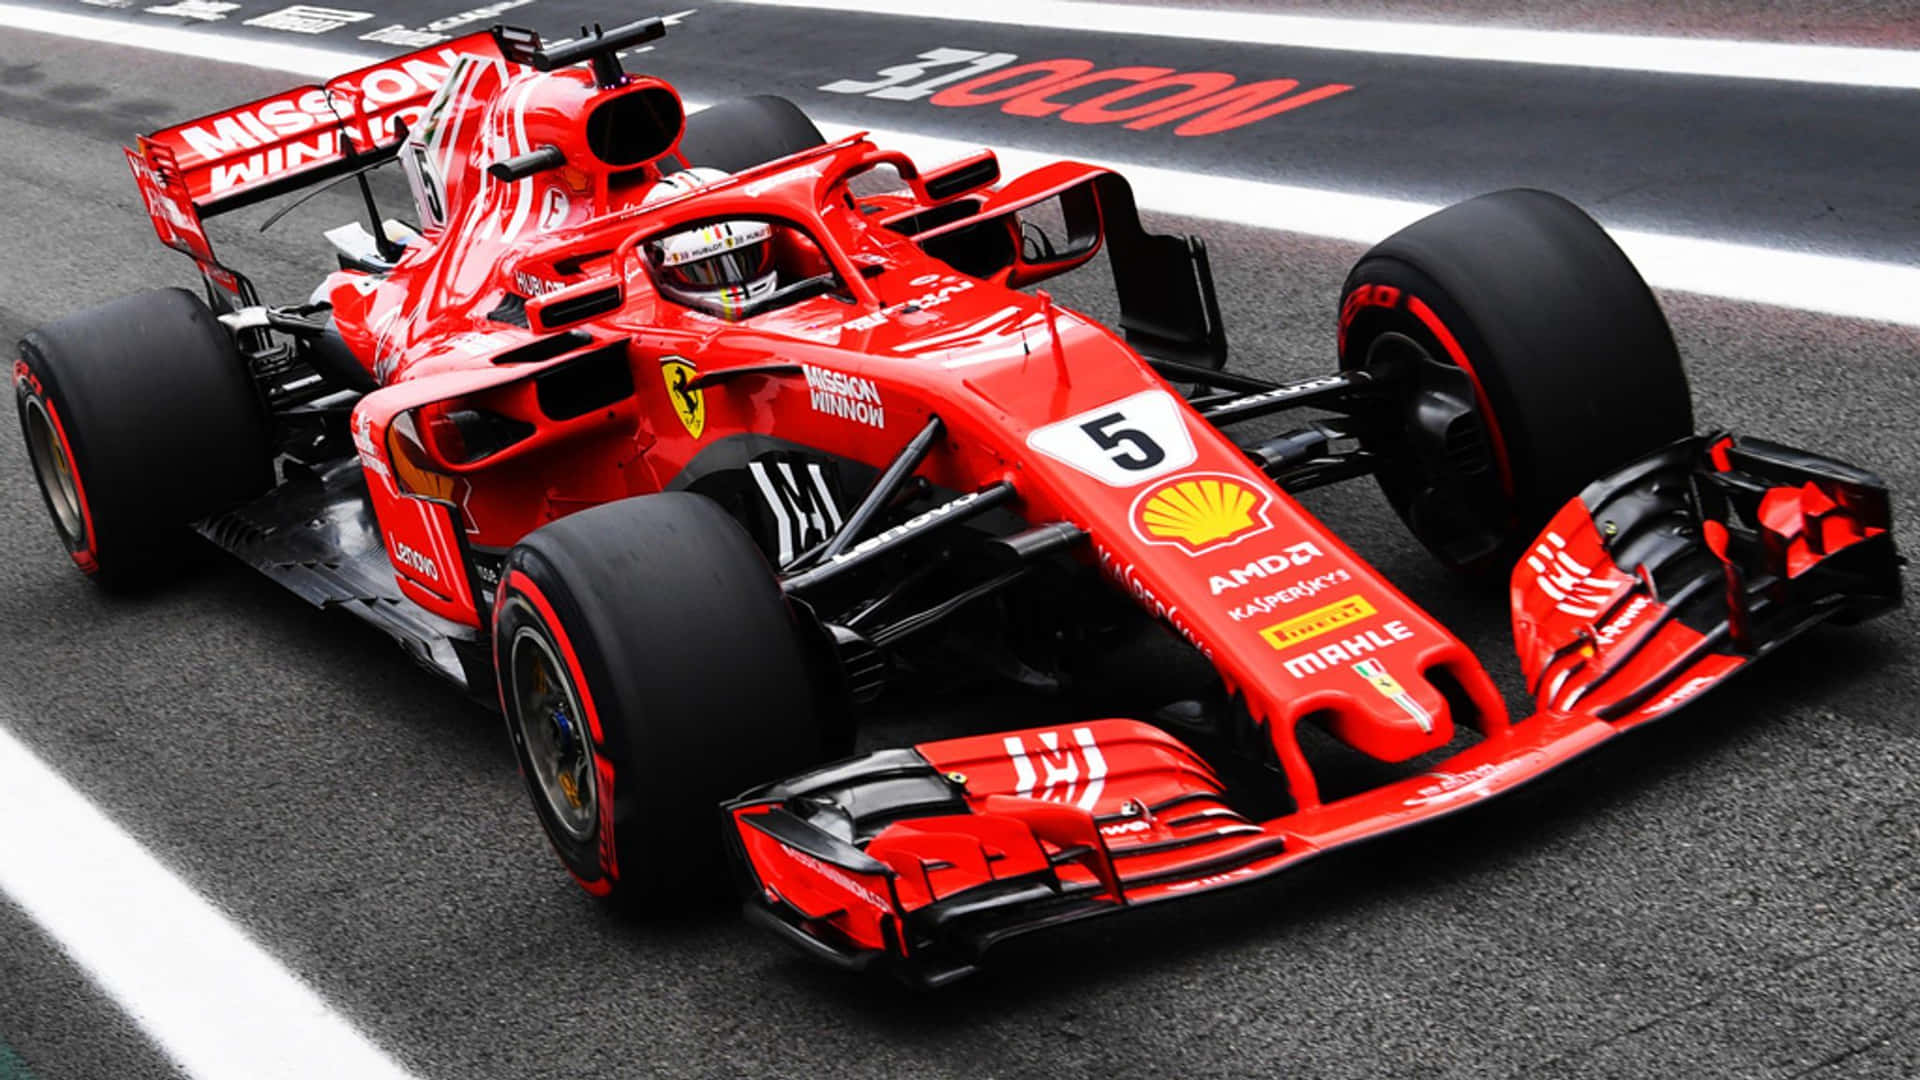 Ferrari F1 2019 Racecar Wallpaper